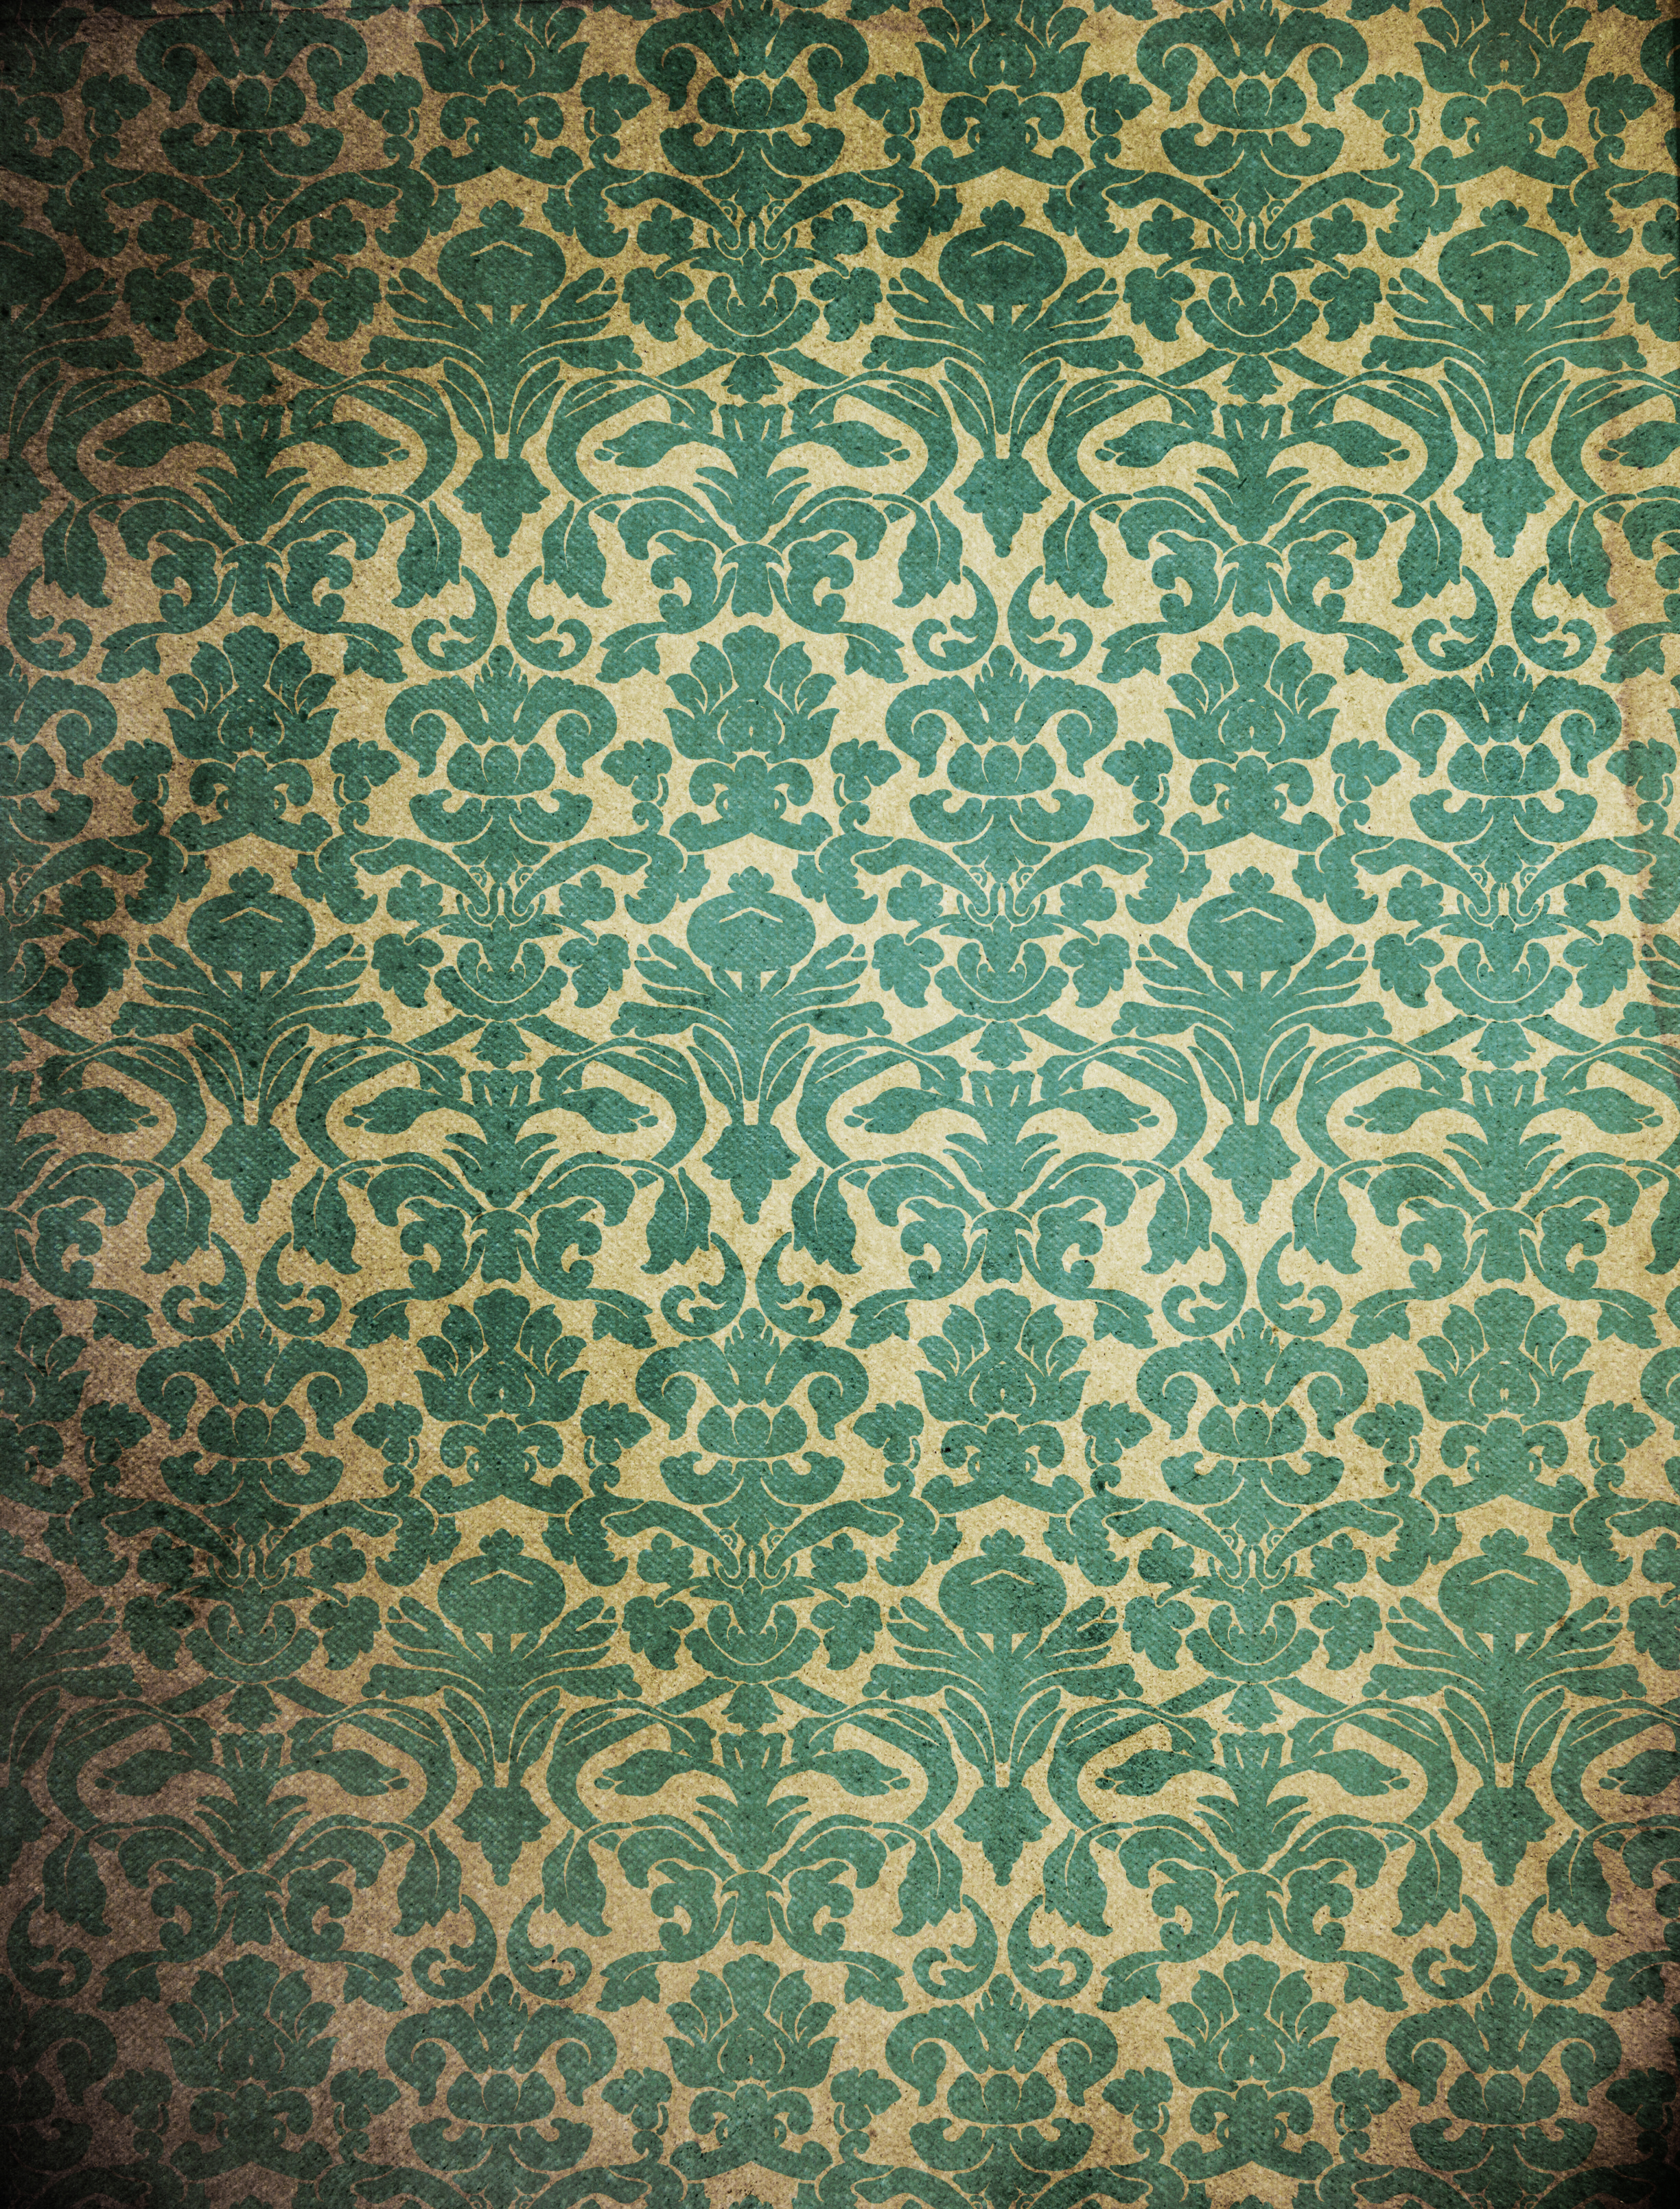 vintage wallpaper,pattern,green,turquoise,aqua,design